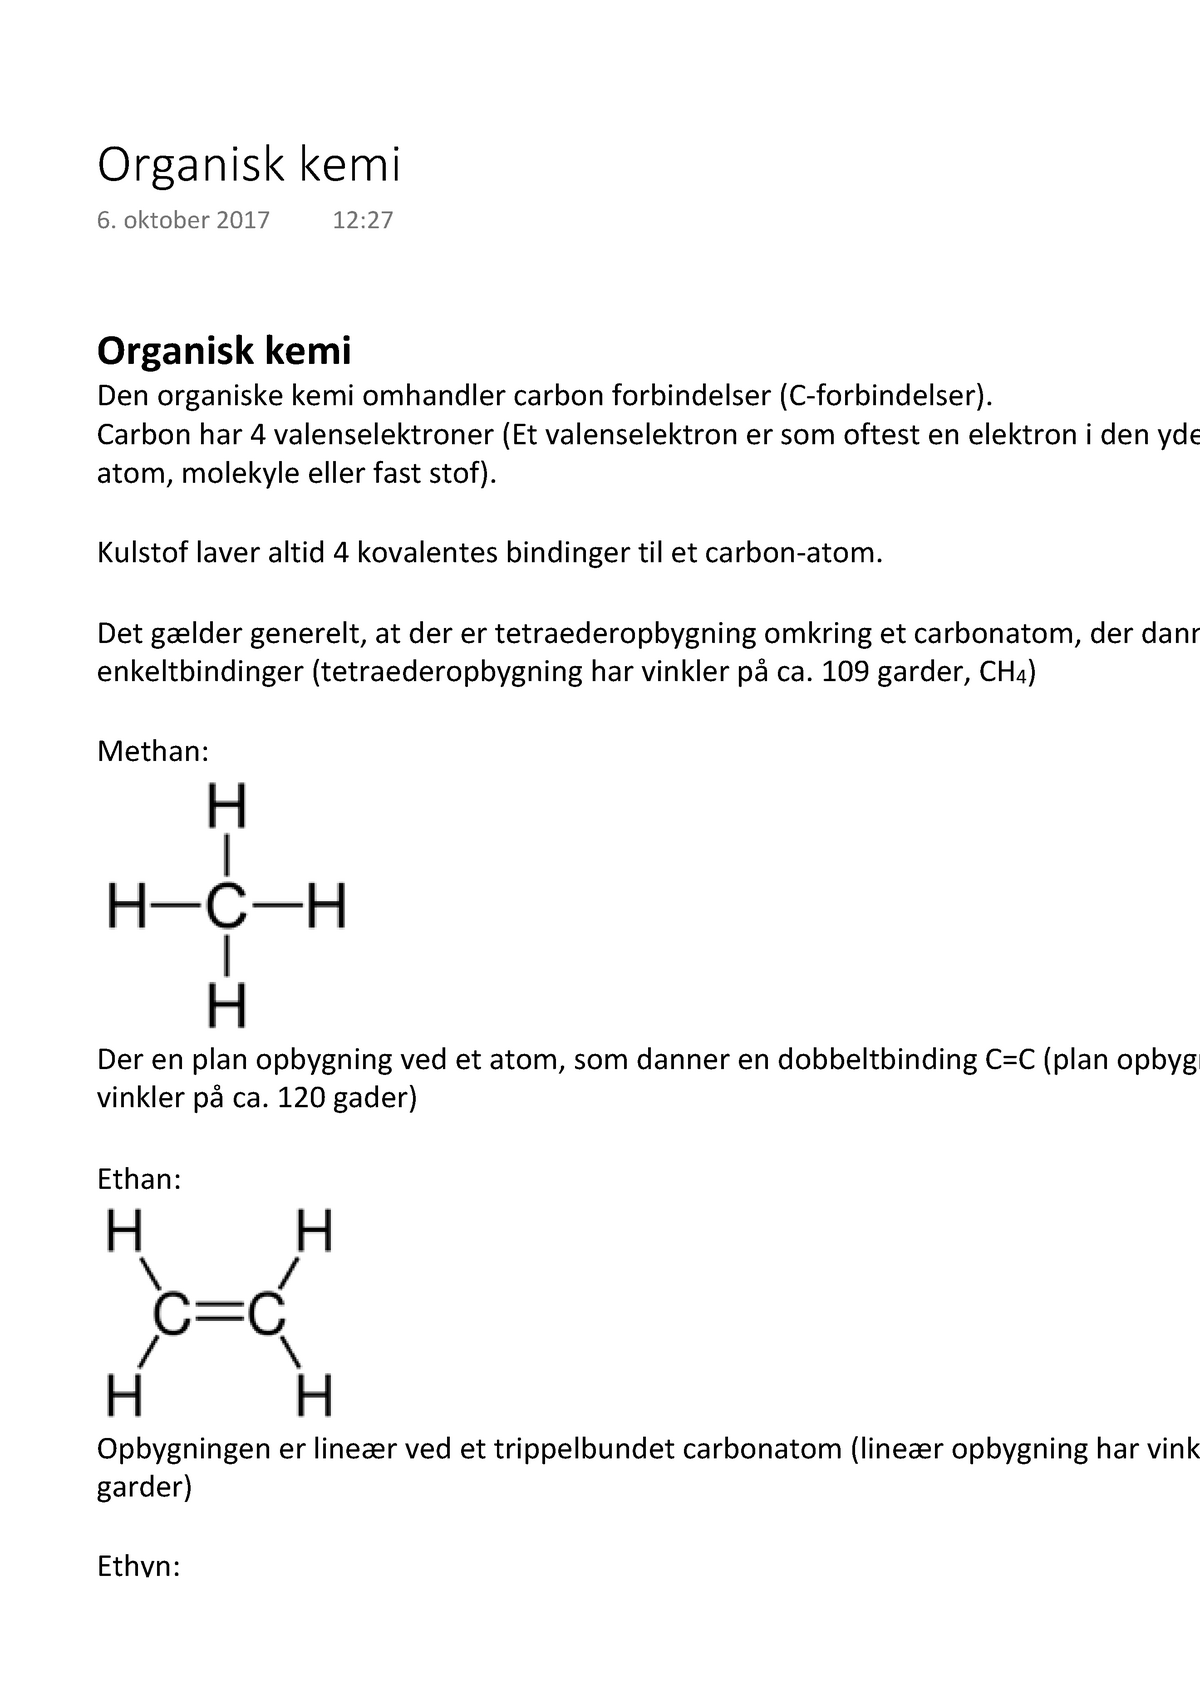 Organisk kemi - Organisk organiske kemi omhandler carbon forbindelser (C-forbindelser). -